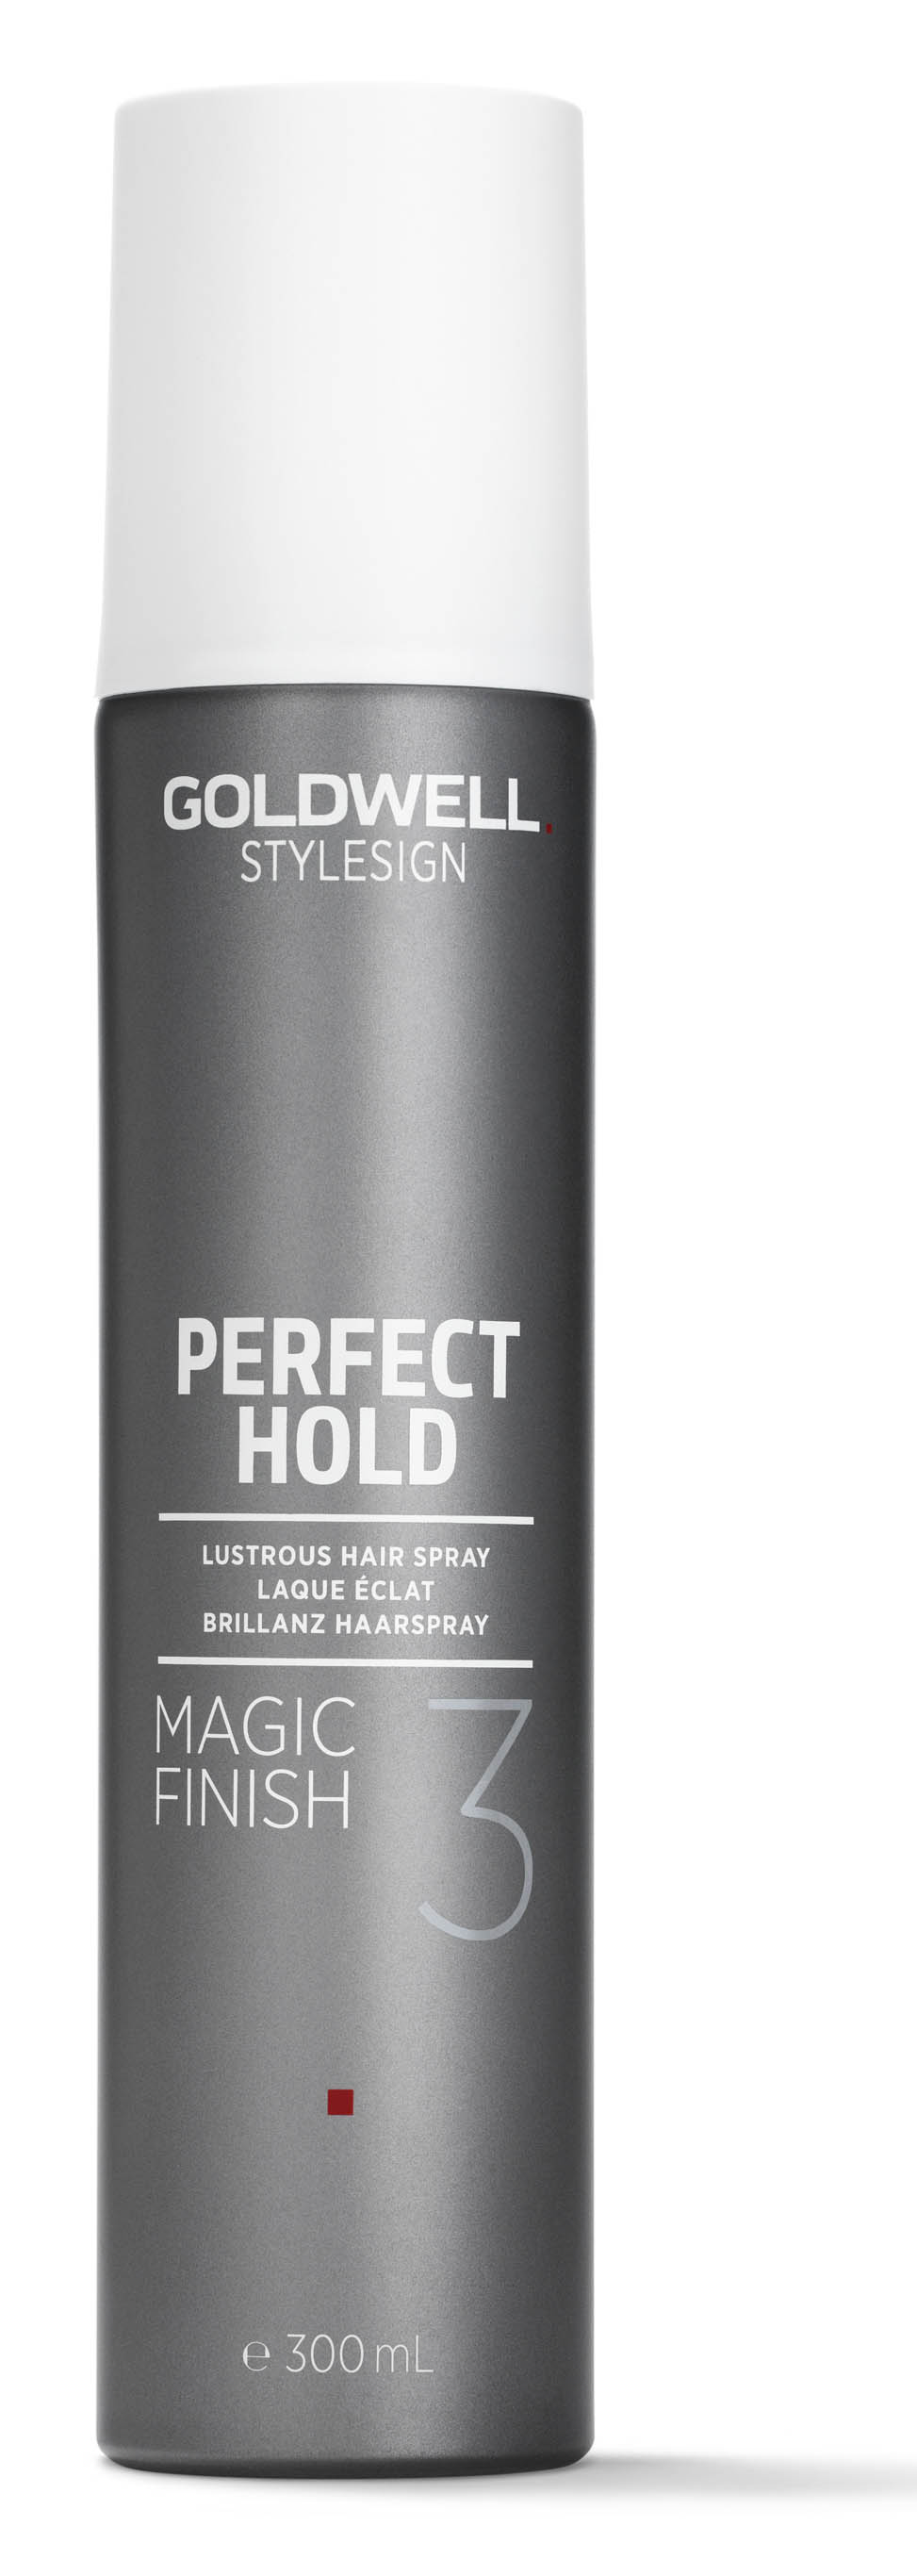 Stylesign MAGIC FINISH, Brillanz Haarspray